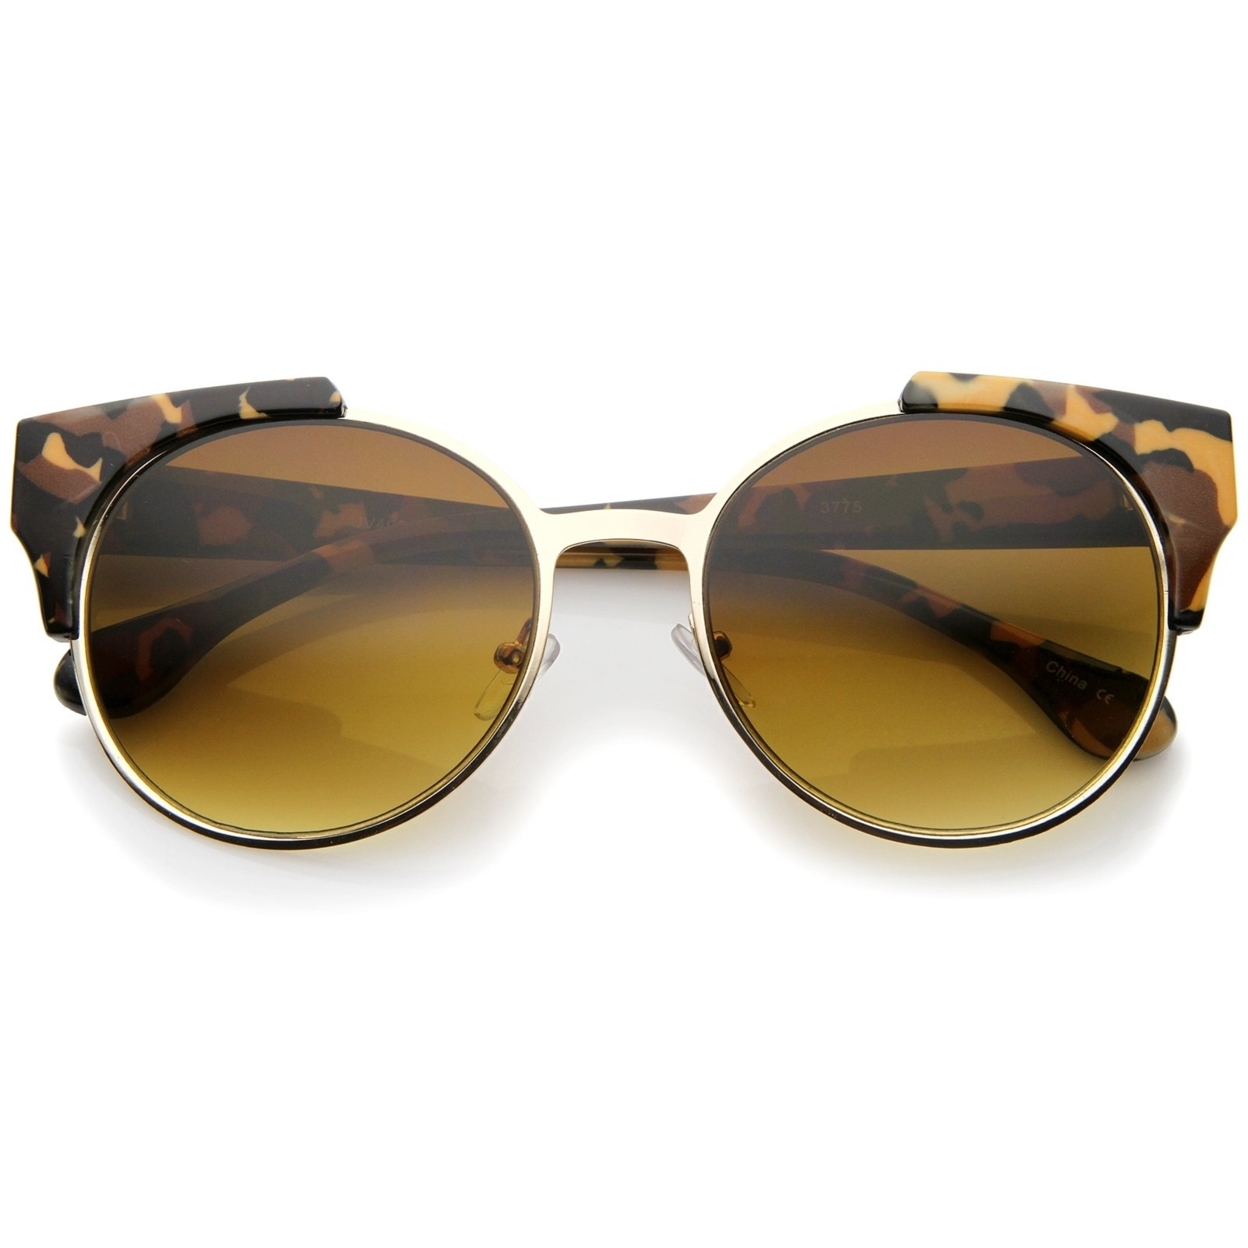 Modern Semi-Rimless Corner Horn Rimmed Round Sunglasses 53mm - Brown Camo-Gold / Amber